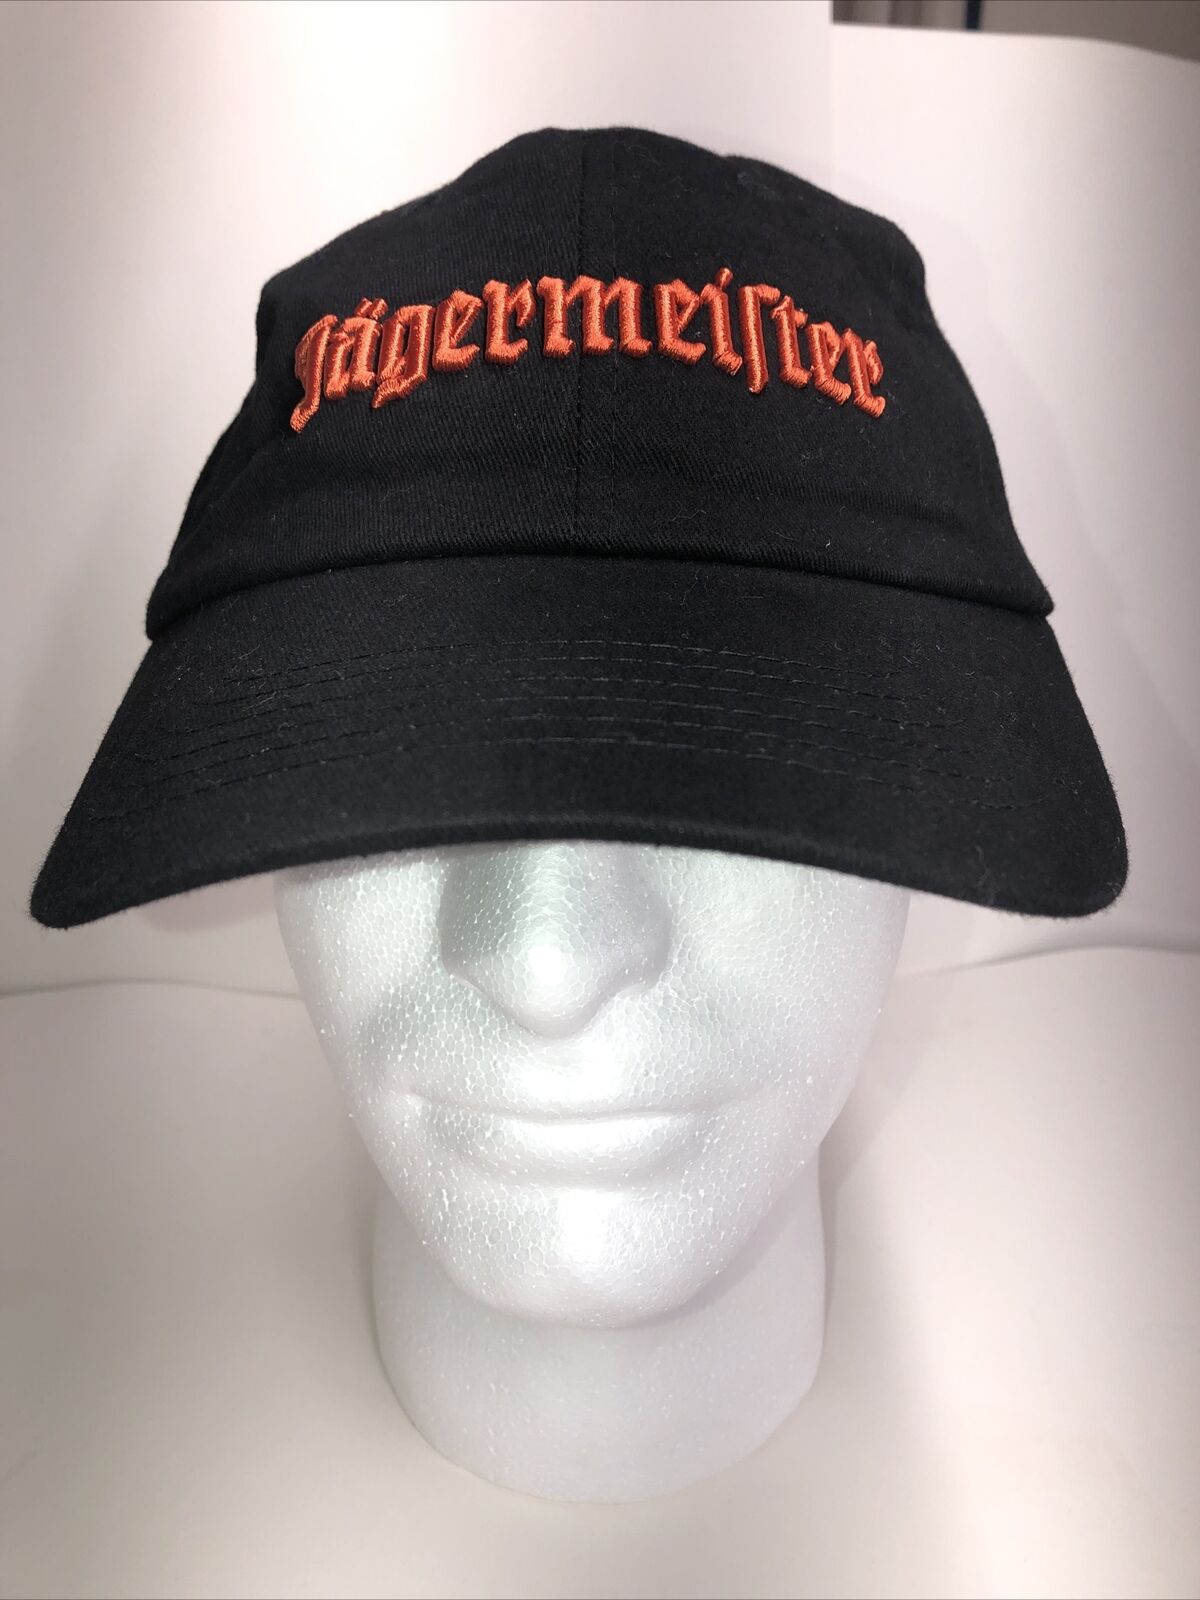 Jagermeister Black Orange Raised Embroidered Logo Adj sz Baseball Ball Cap Hat